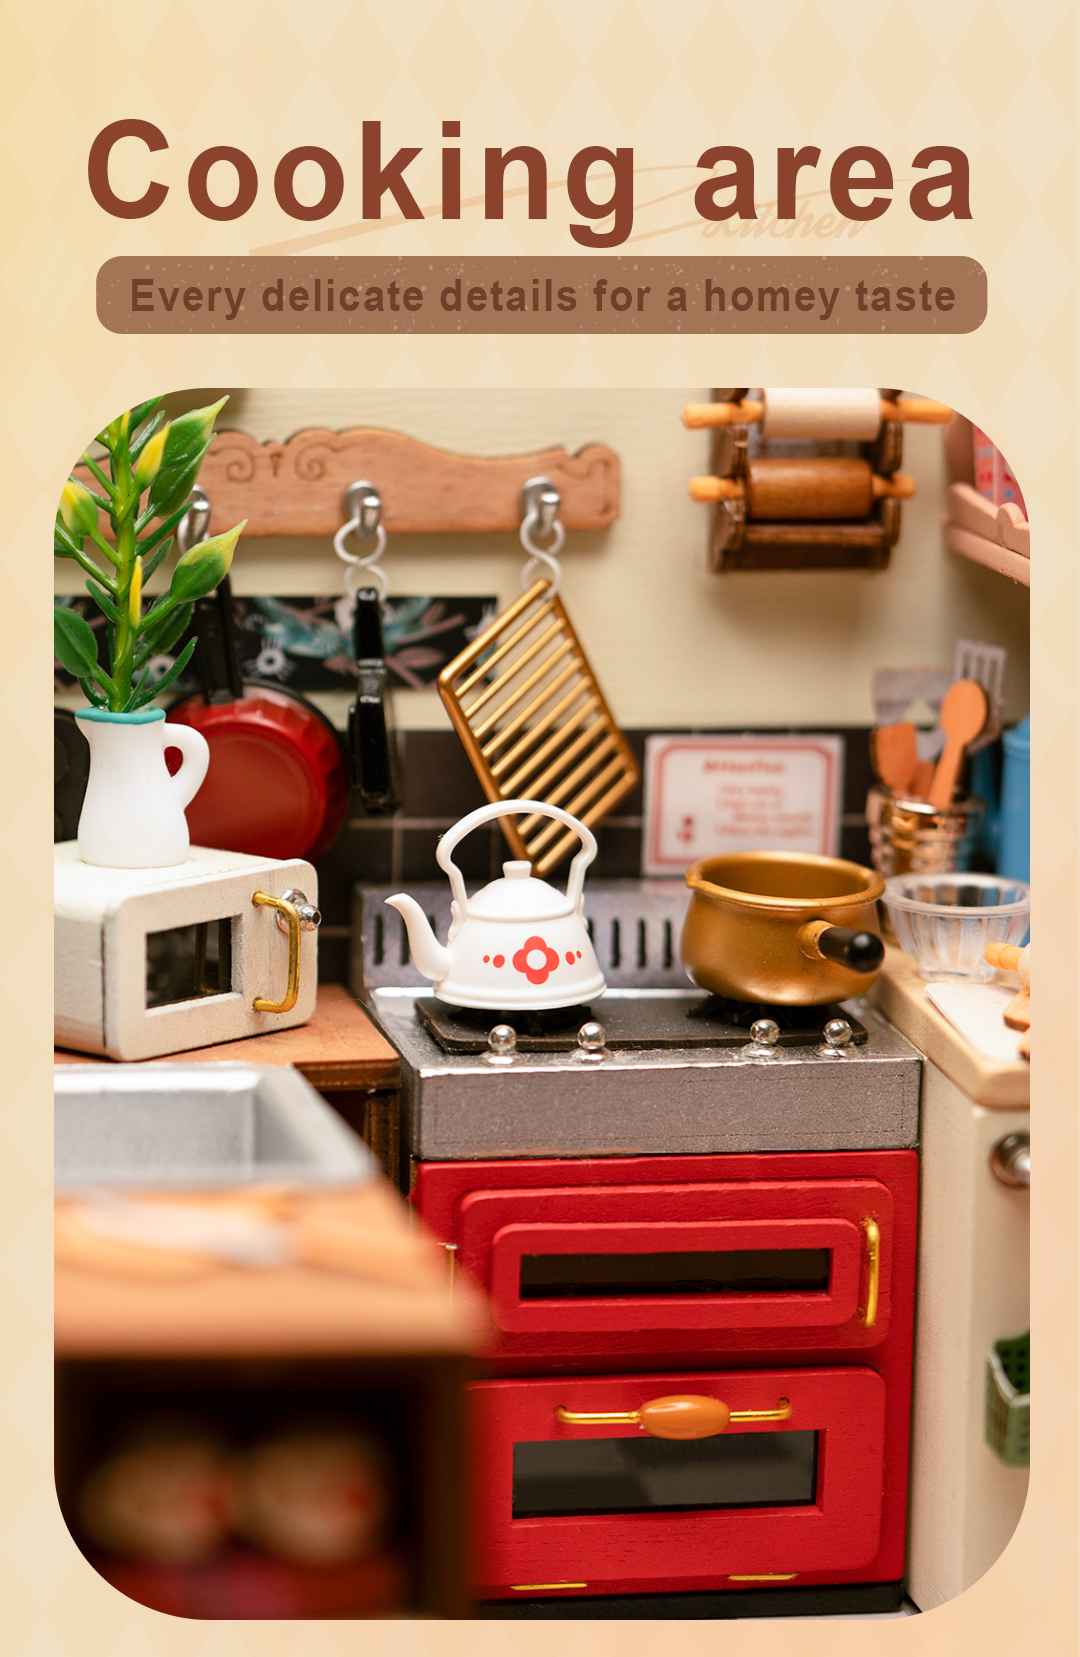 Rolife DIY Miniature House - Cozy Kitchen DG159